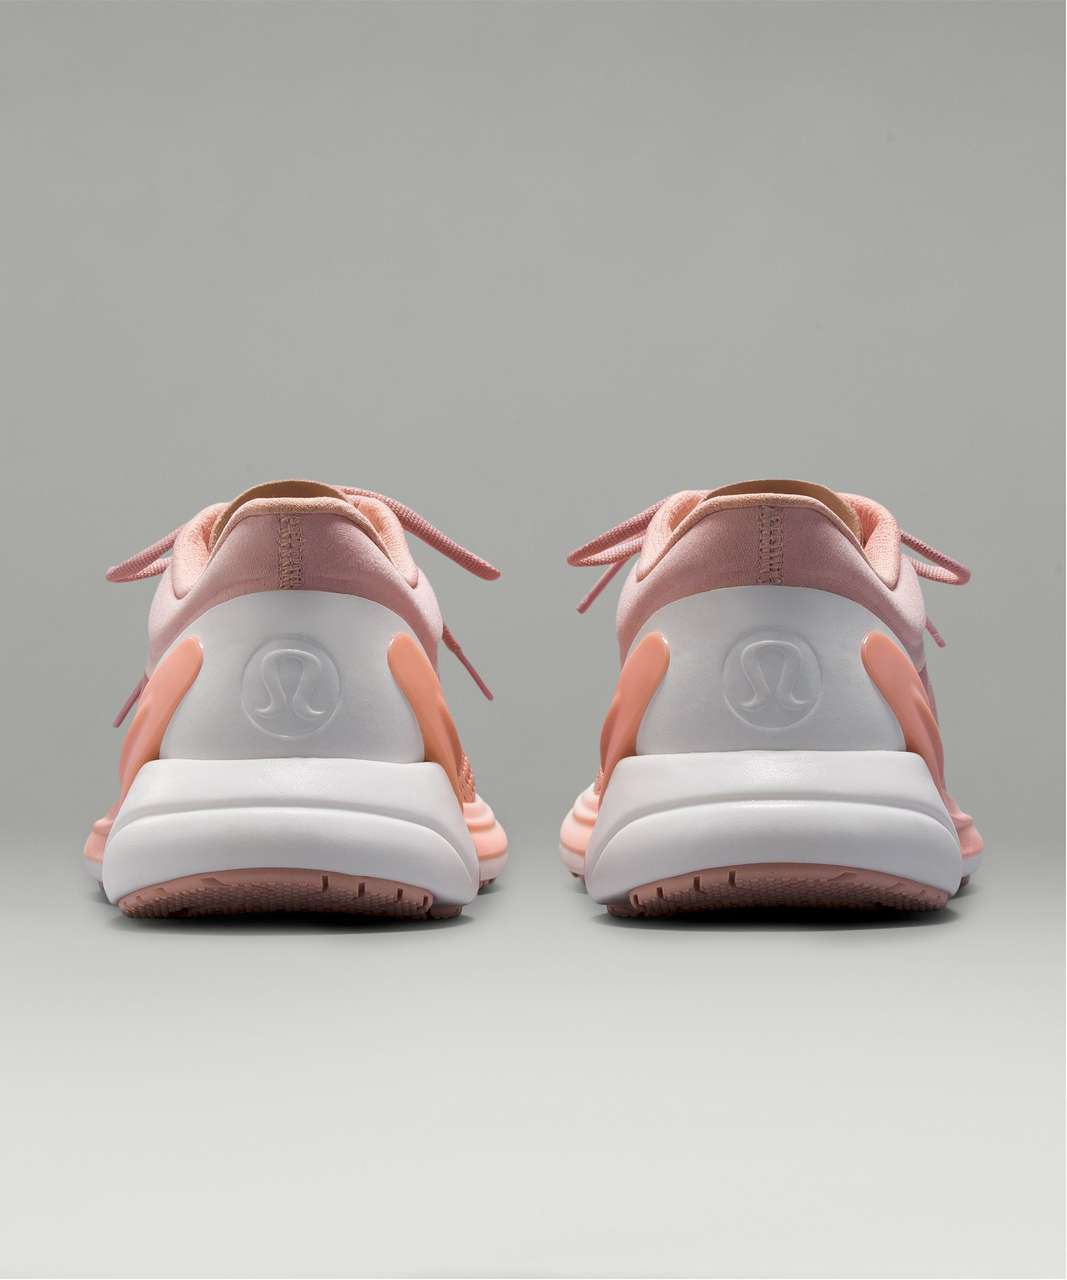 Lululemon Blissfeel Womens Running Shoe - Mink Berry / Pink